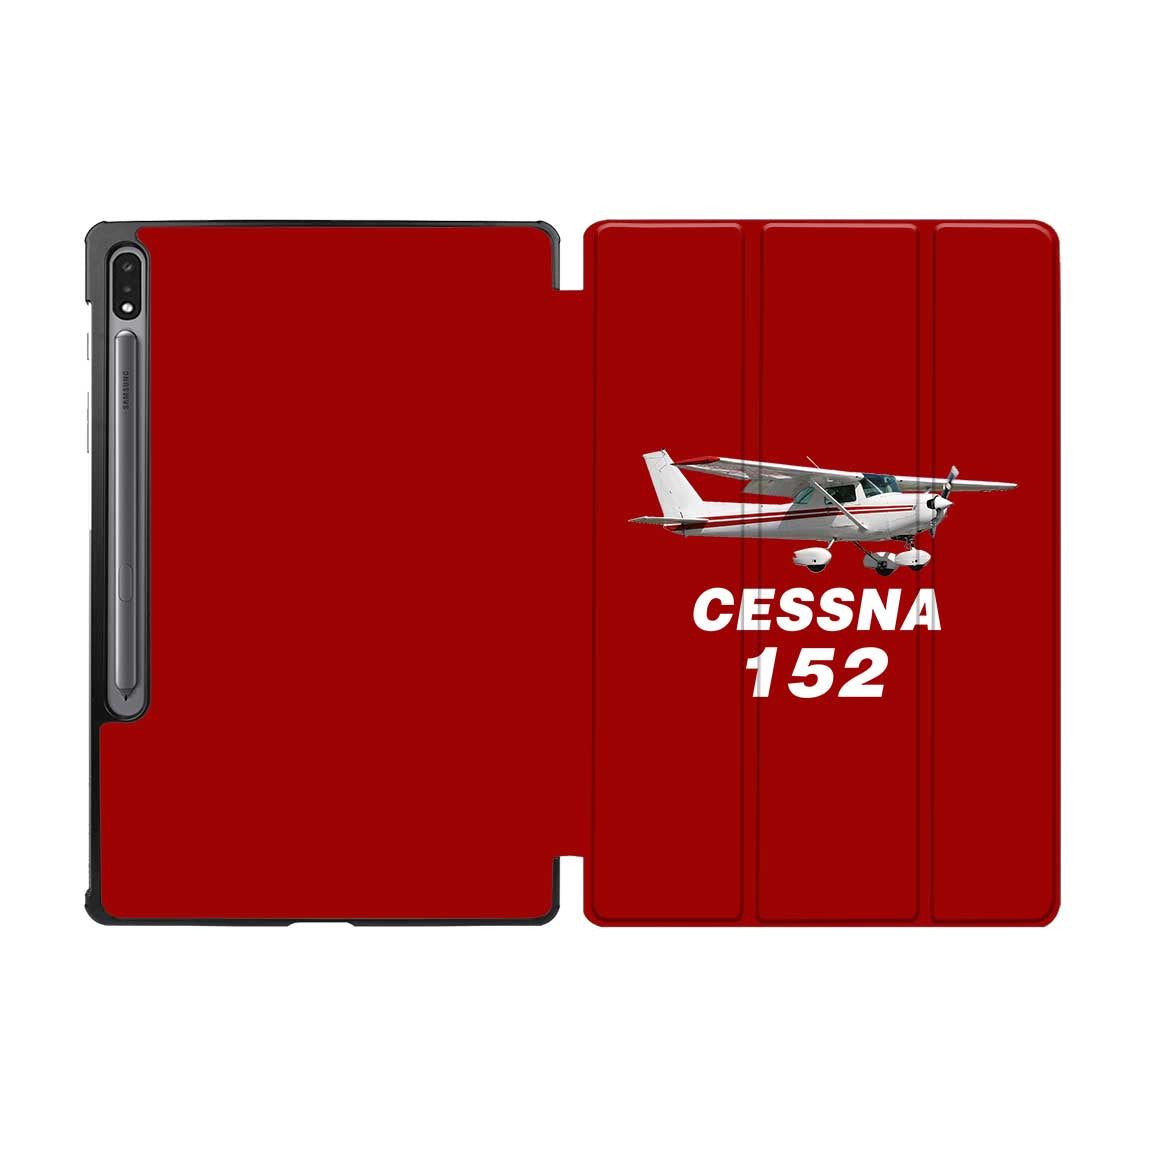 The Cessna 152 Designed Samsung Tablet Cases